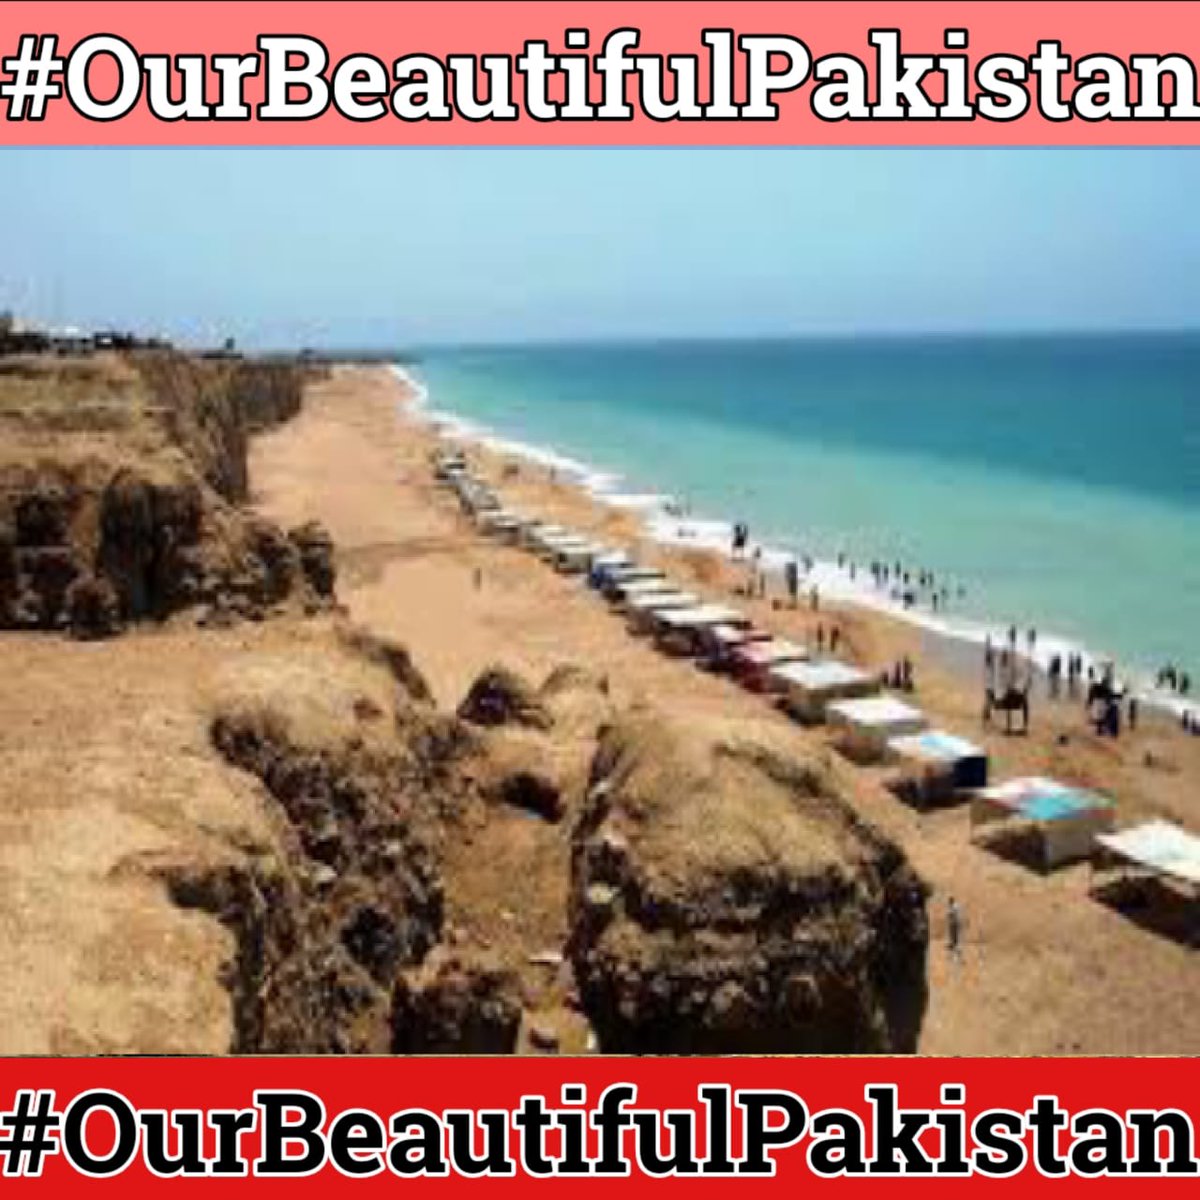 #OurBeautifulPakistan

@Pak_Guardian
@MeTalatK